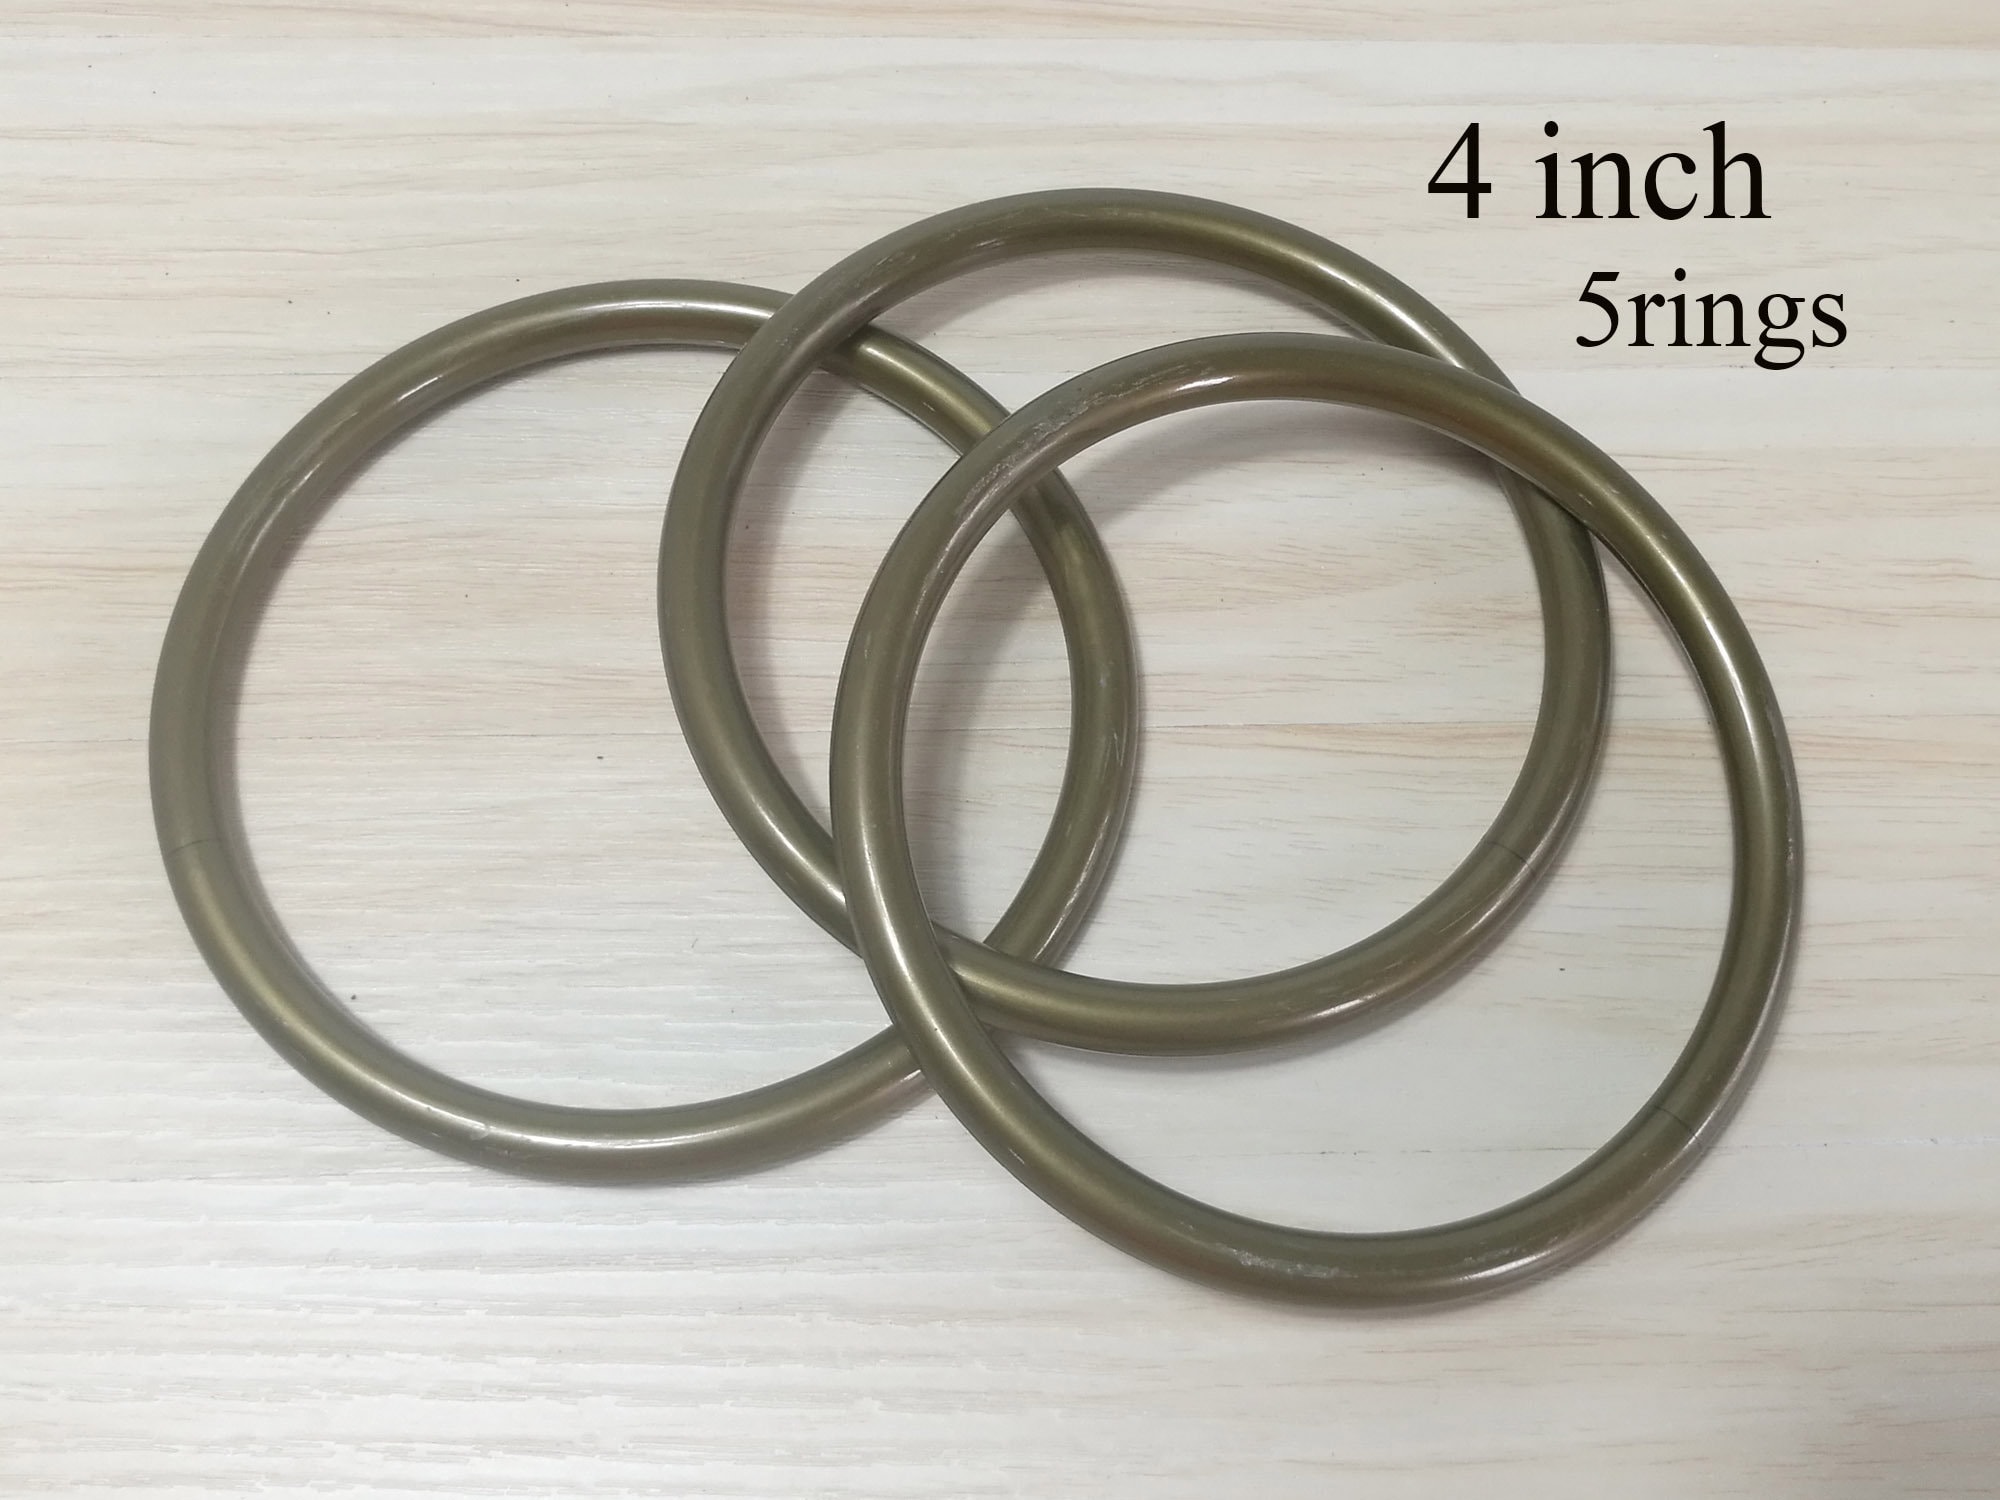 Plastic Macrame Ringscraft Plastic Ringmacrame Craft Rings1.4inch 35mm, Set  of 12 -  Norway